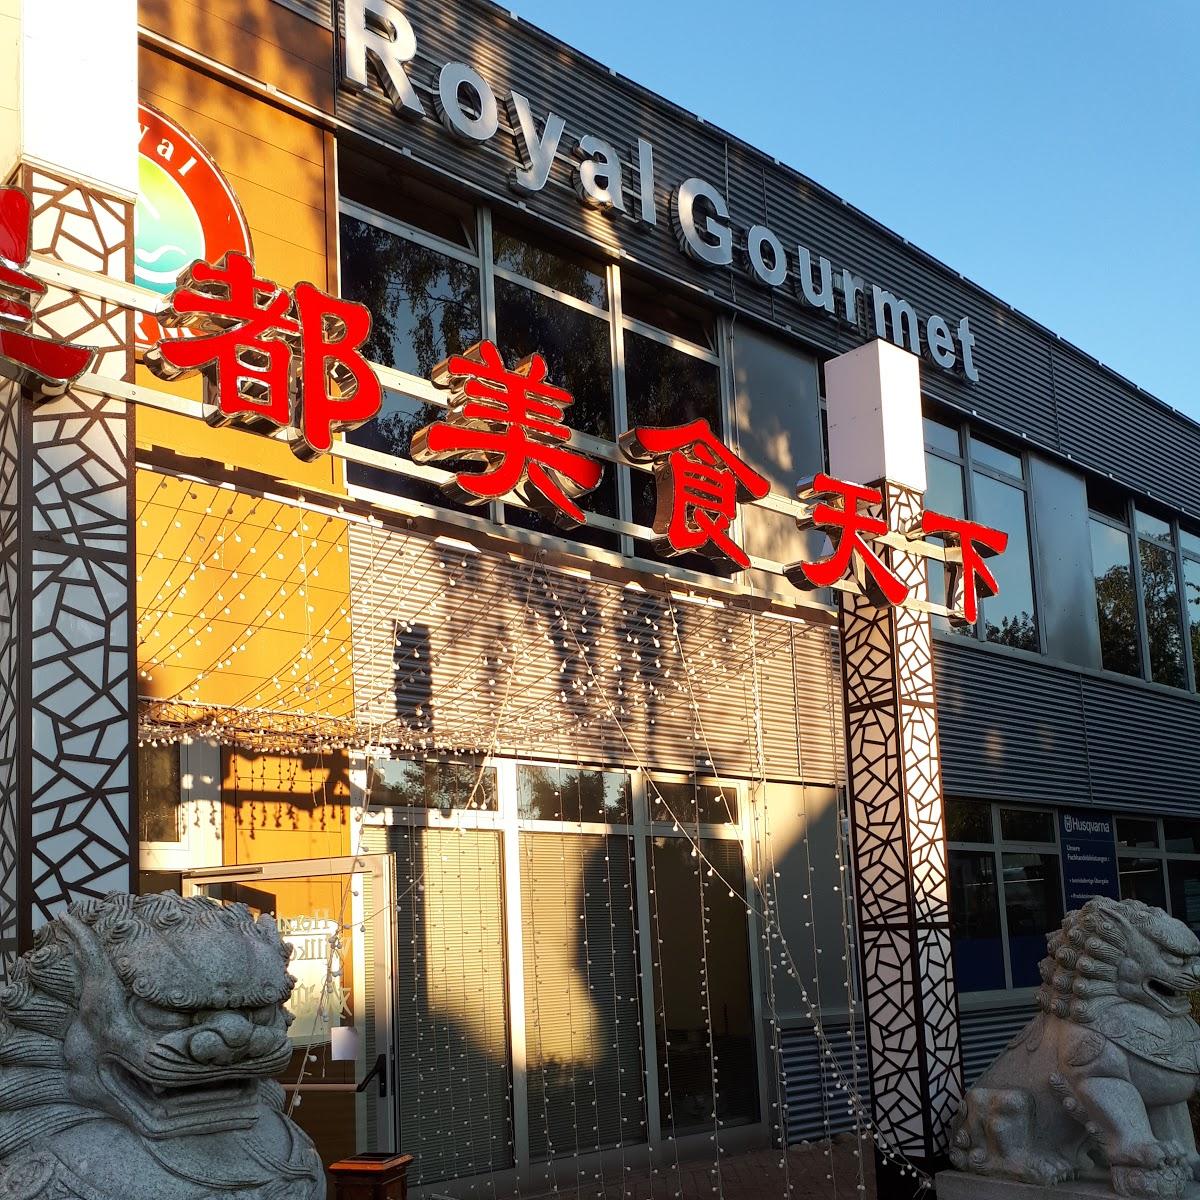 Restaurant "Royal Gourmet" in Norderstedt